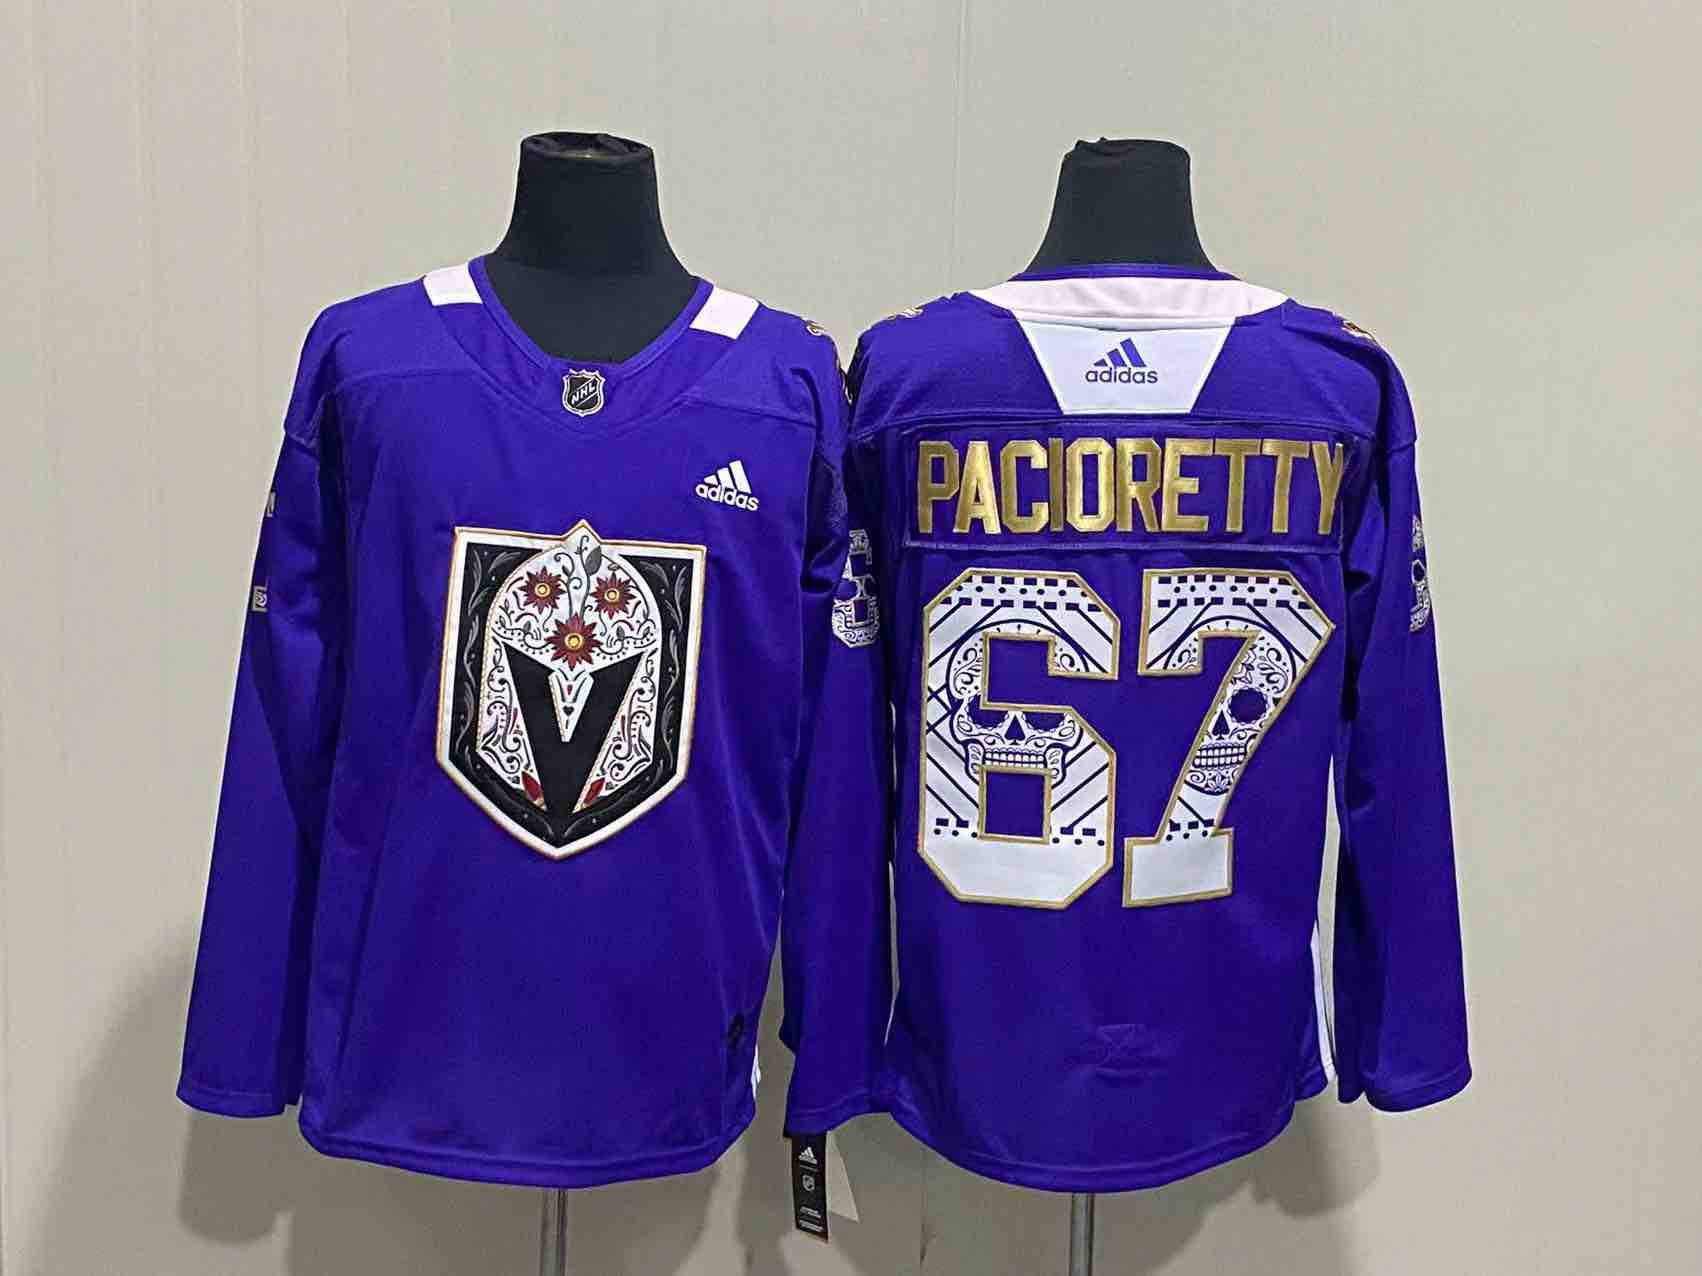 NHL Adidas #67 Pacioretty Purple Jersey